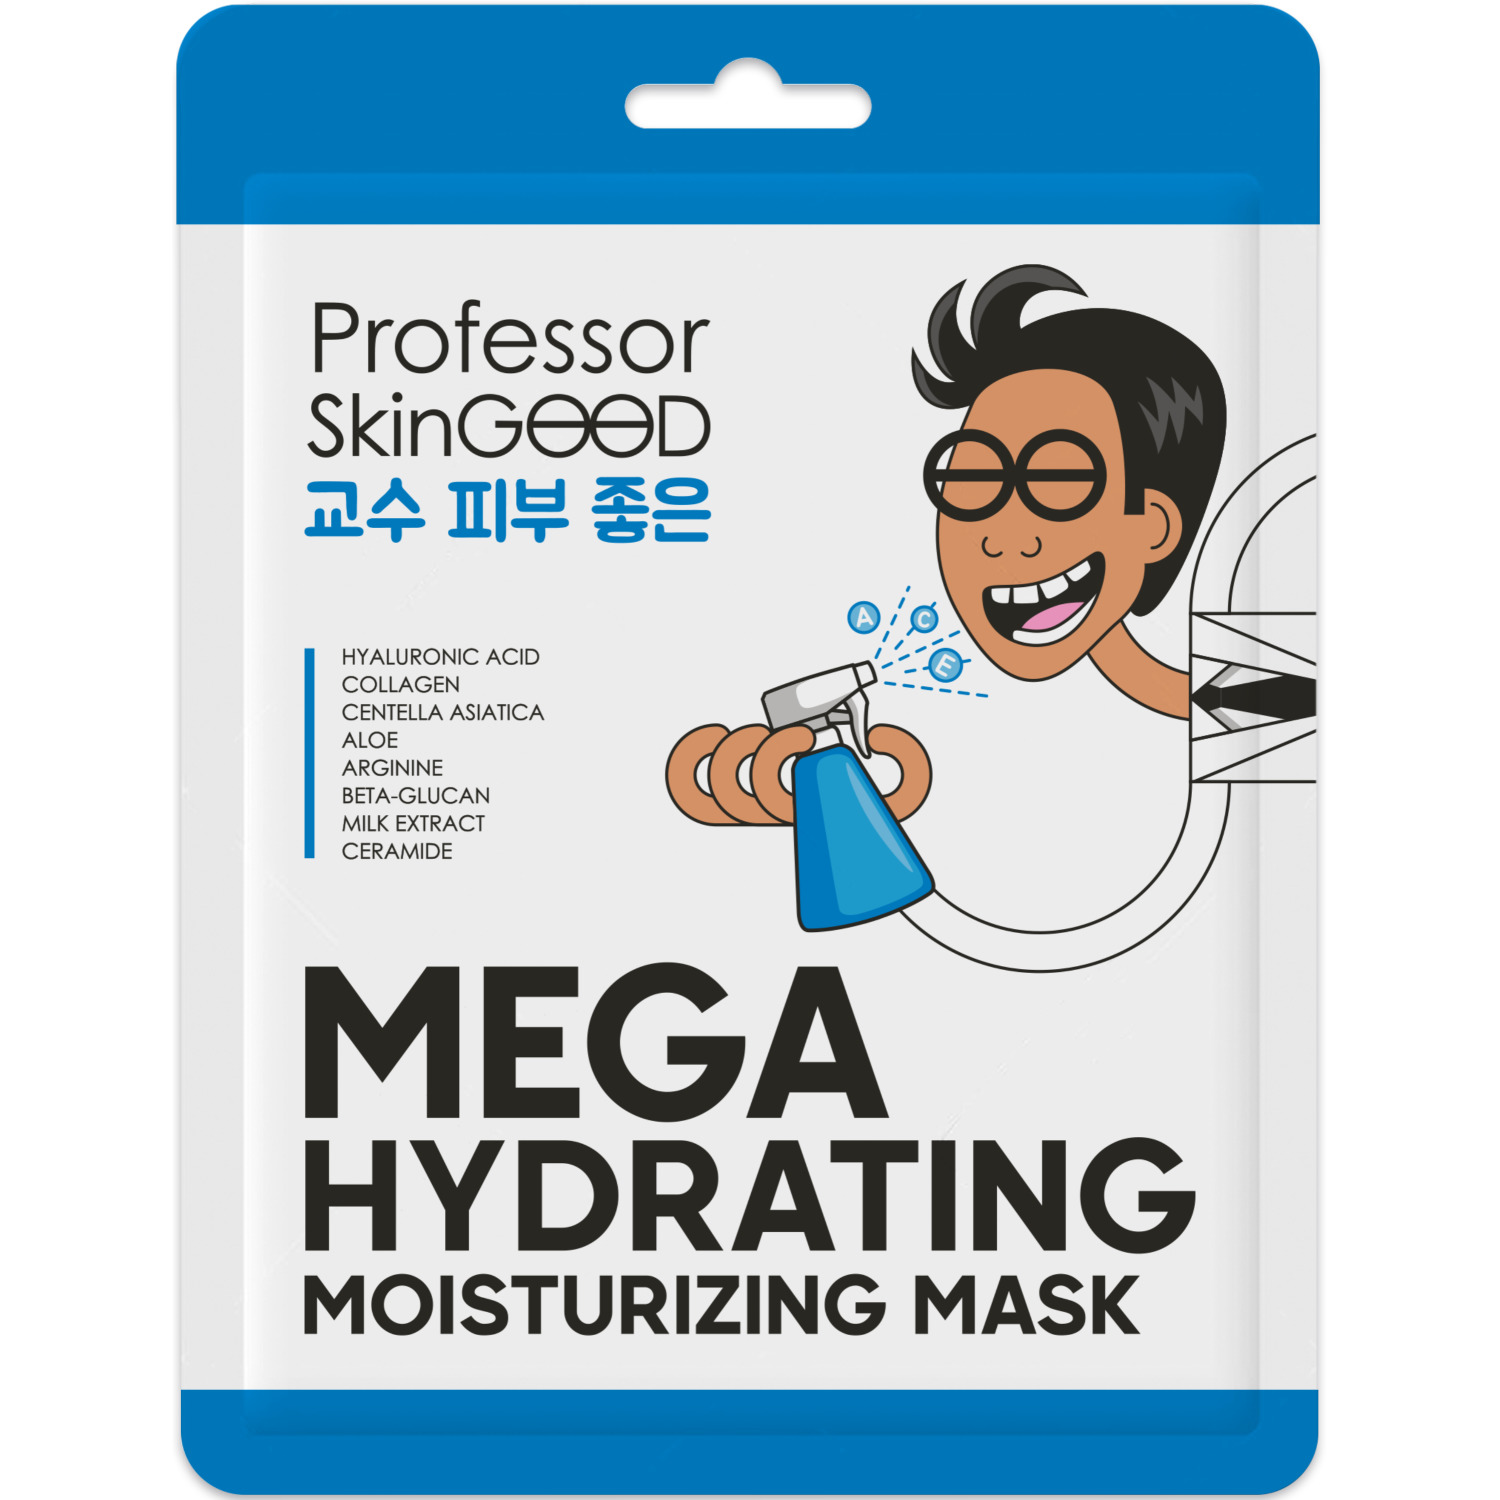 Маска для лица Professor SkinGood Hydrating Moisturizing увлажняющая 1 шт увлажняющая маска под глаза с авокадо 7мл увлажняющая маска для лица 7мл саше